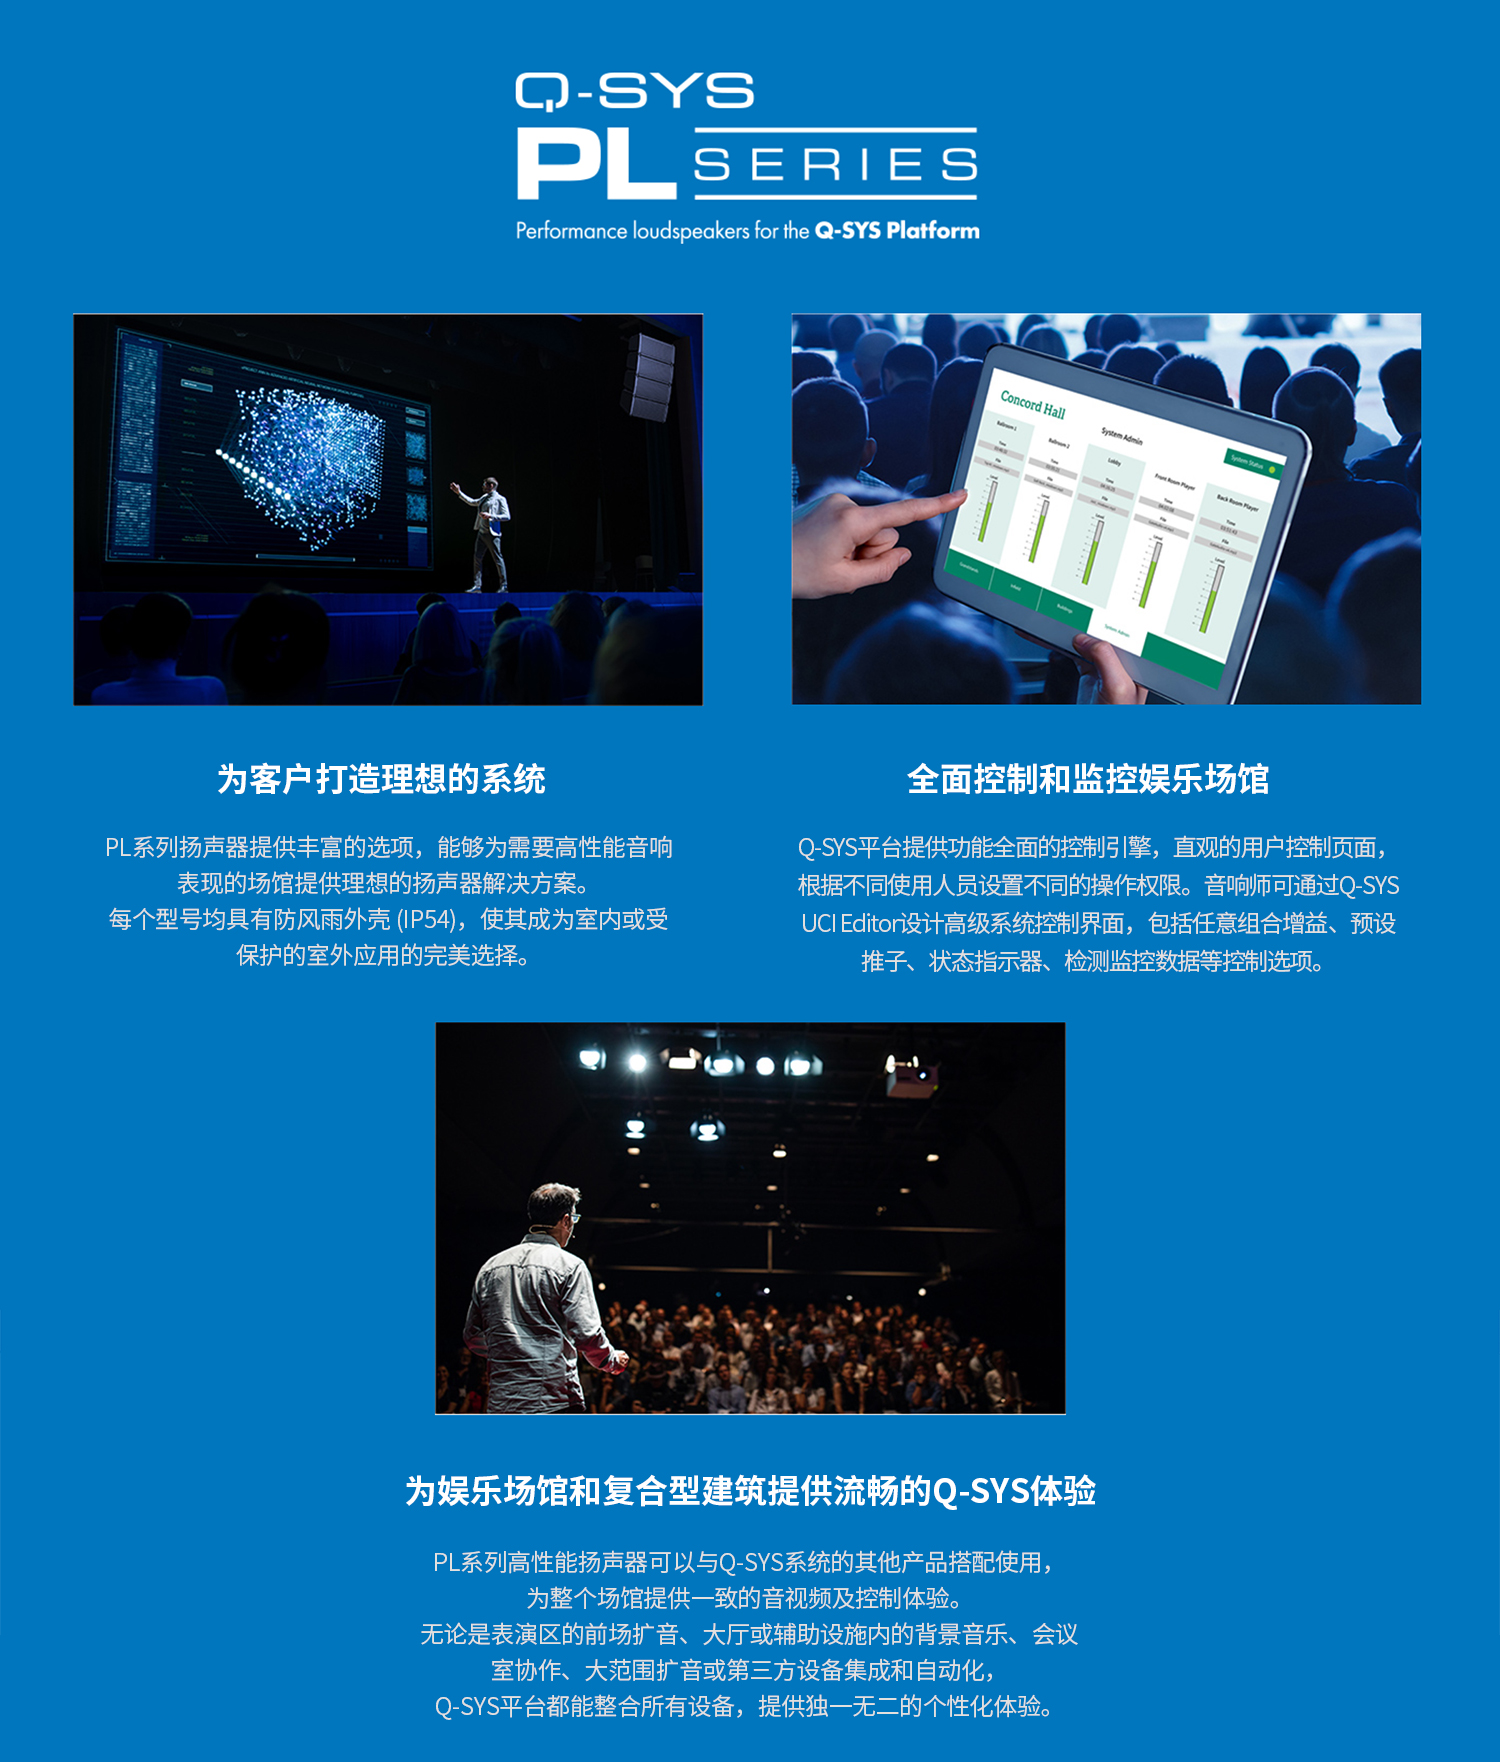 PL-series-info-01.jpg